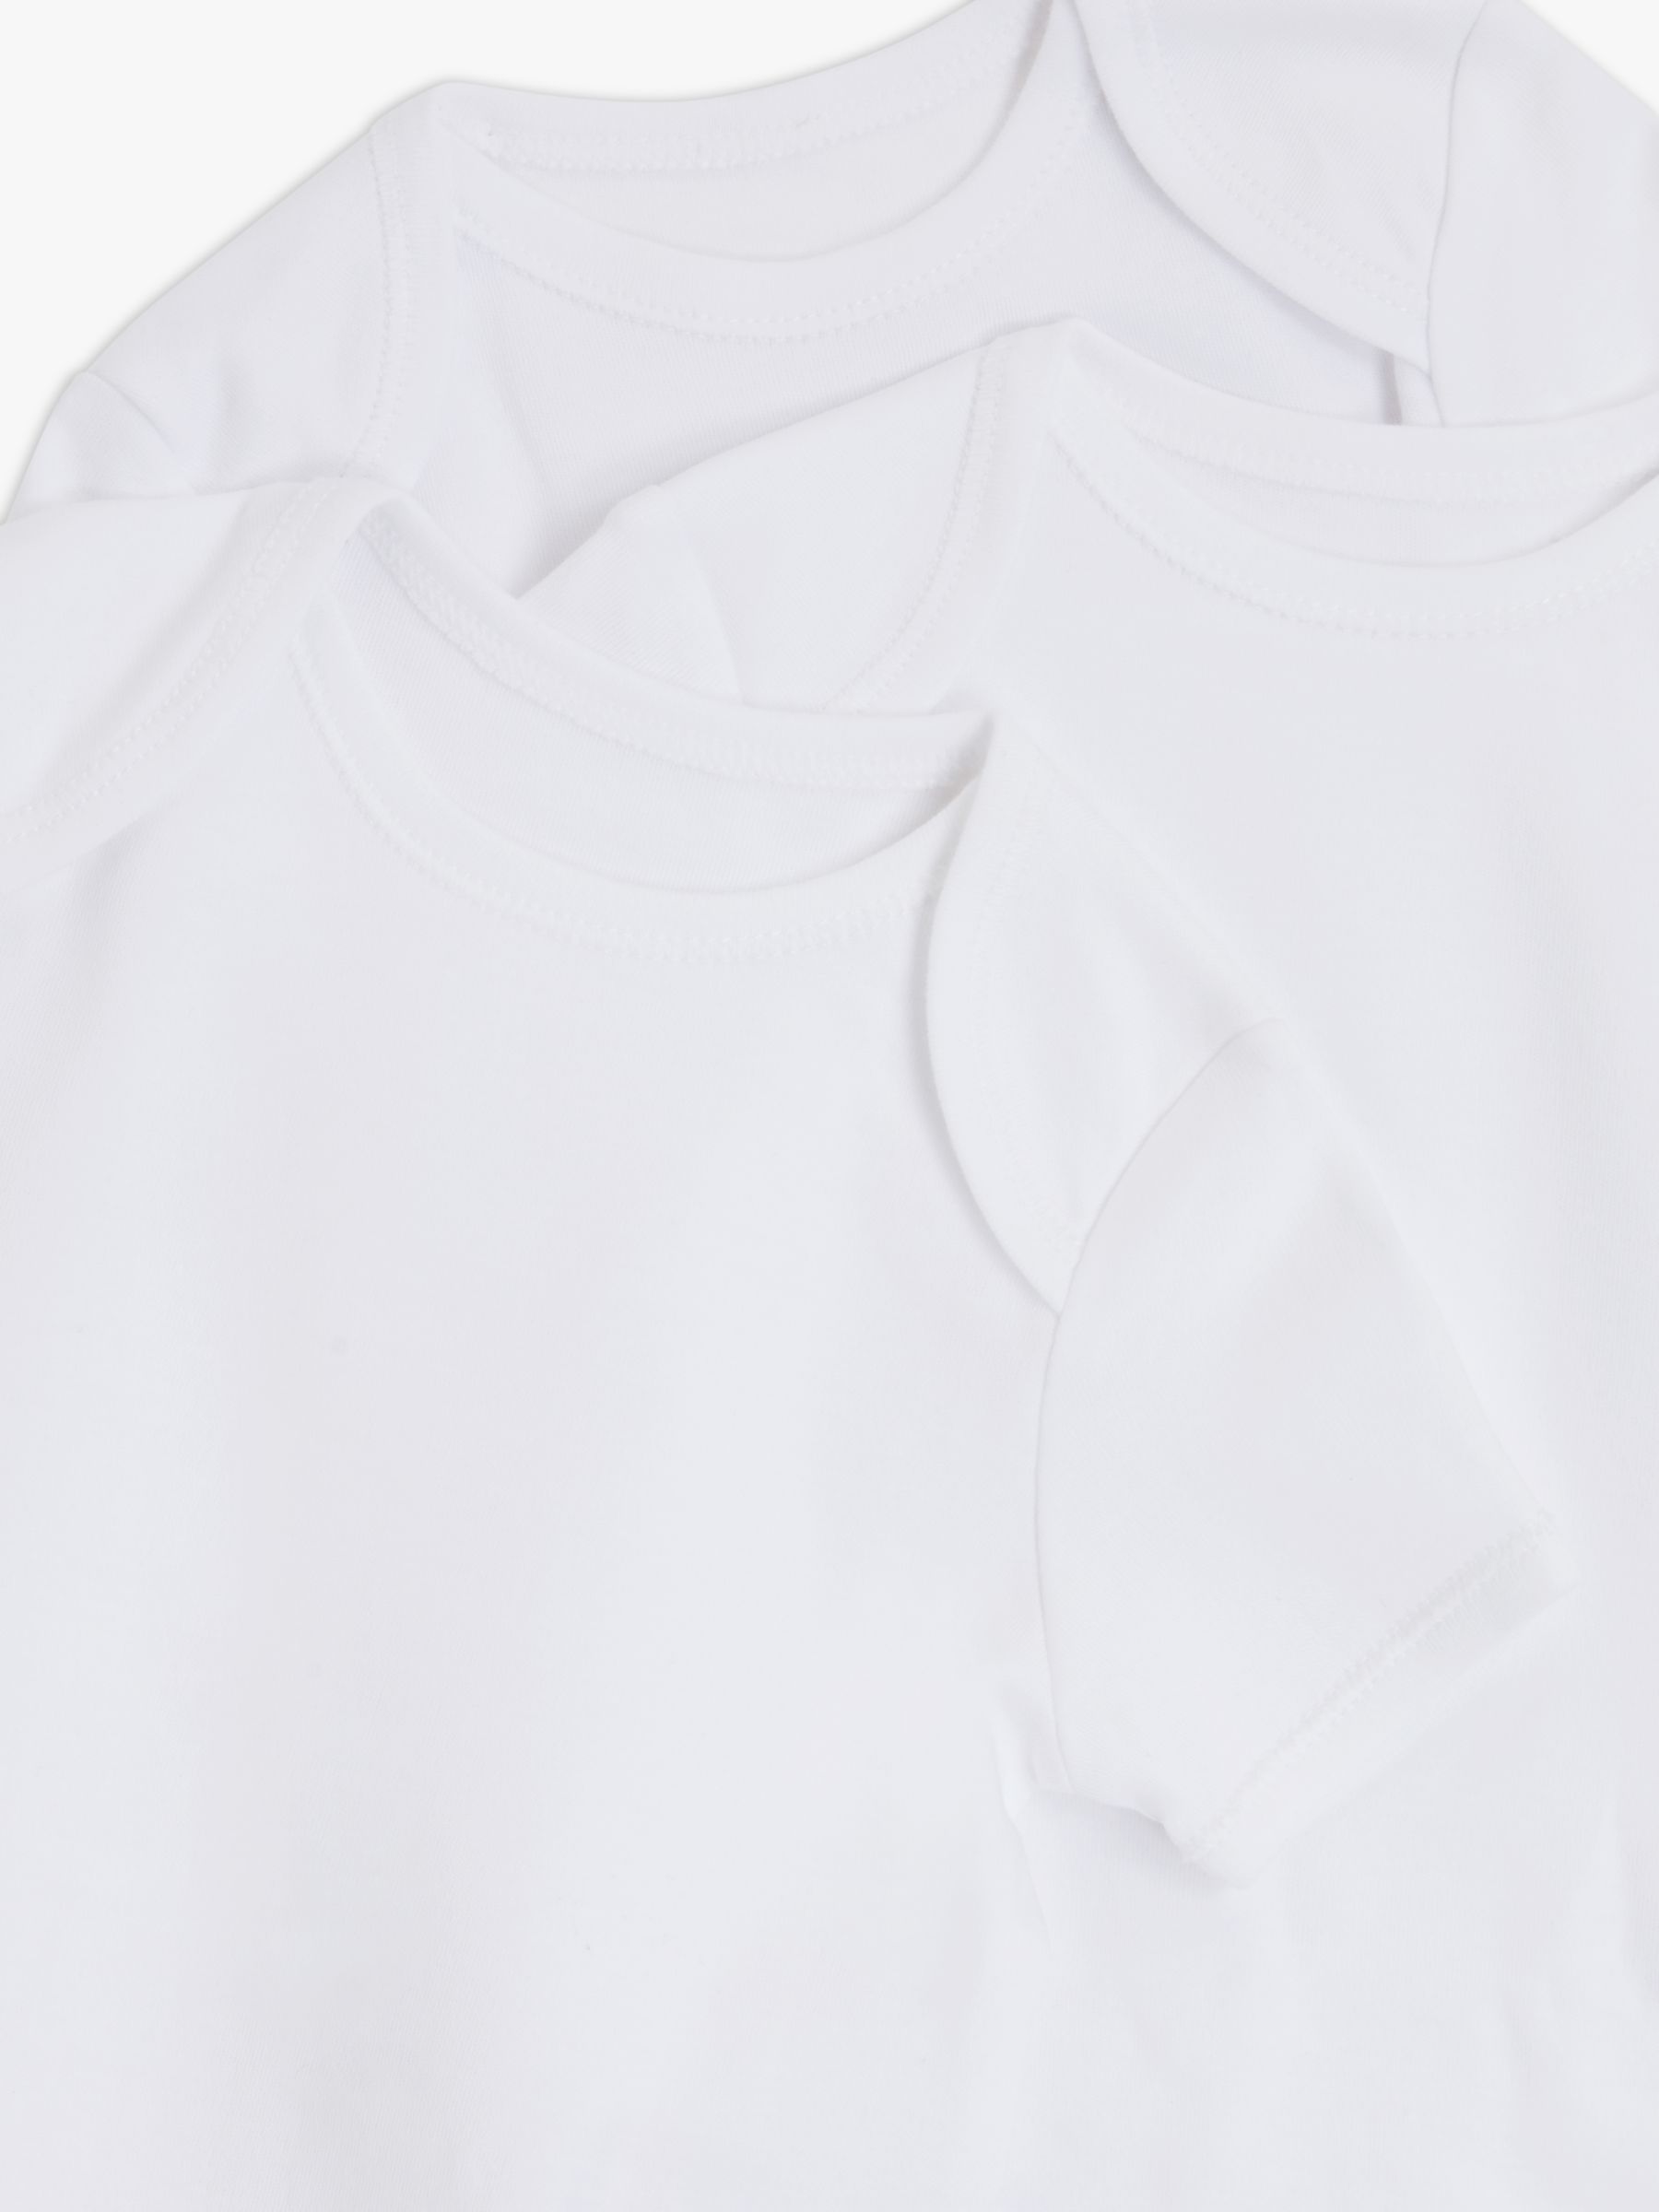 John Lewis Baby GOTS Organic Cotton Short Sleeve Bodysuits, Pack of 5 ...